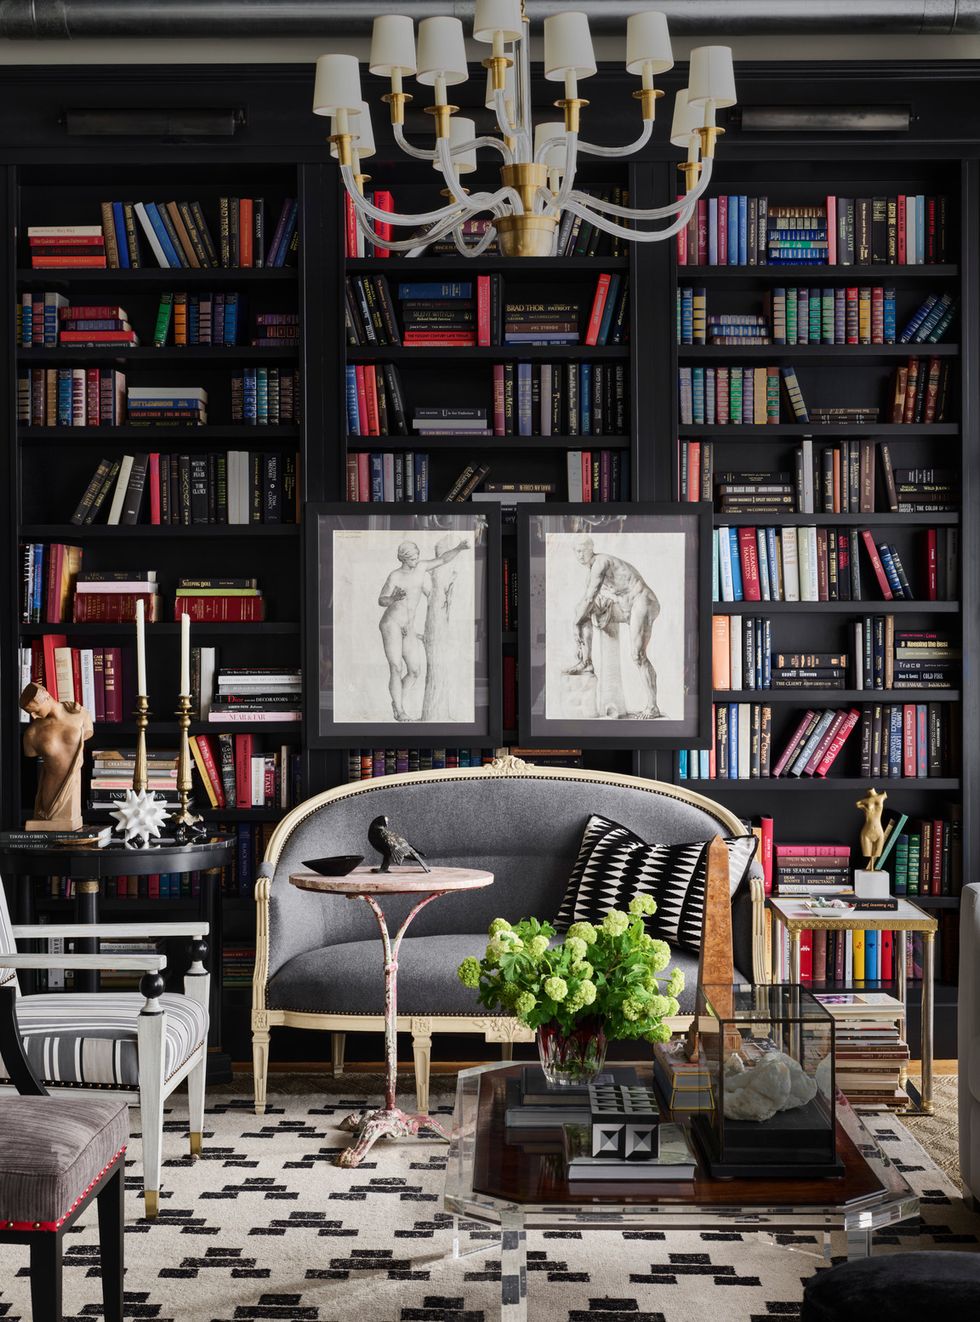 How to Organize Your Bookshelves, According to Interior Designers